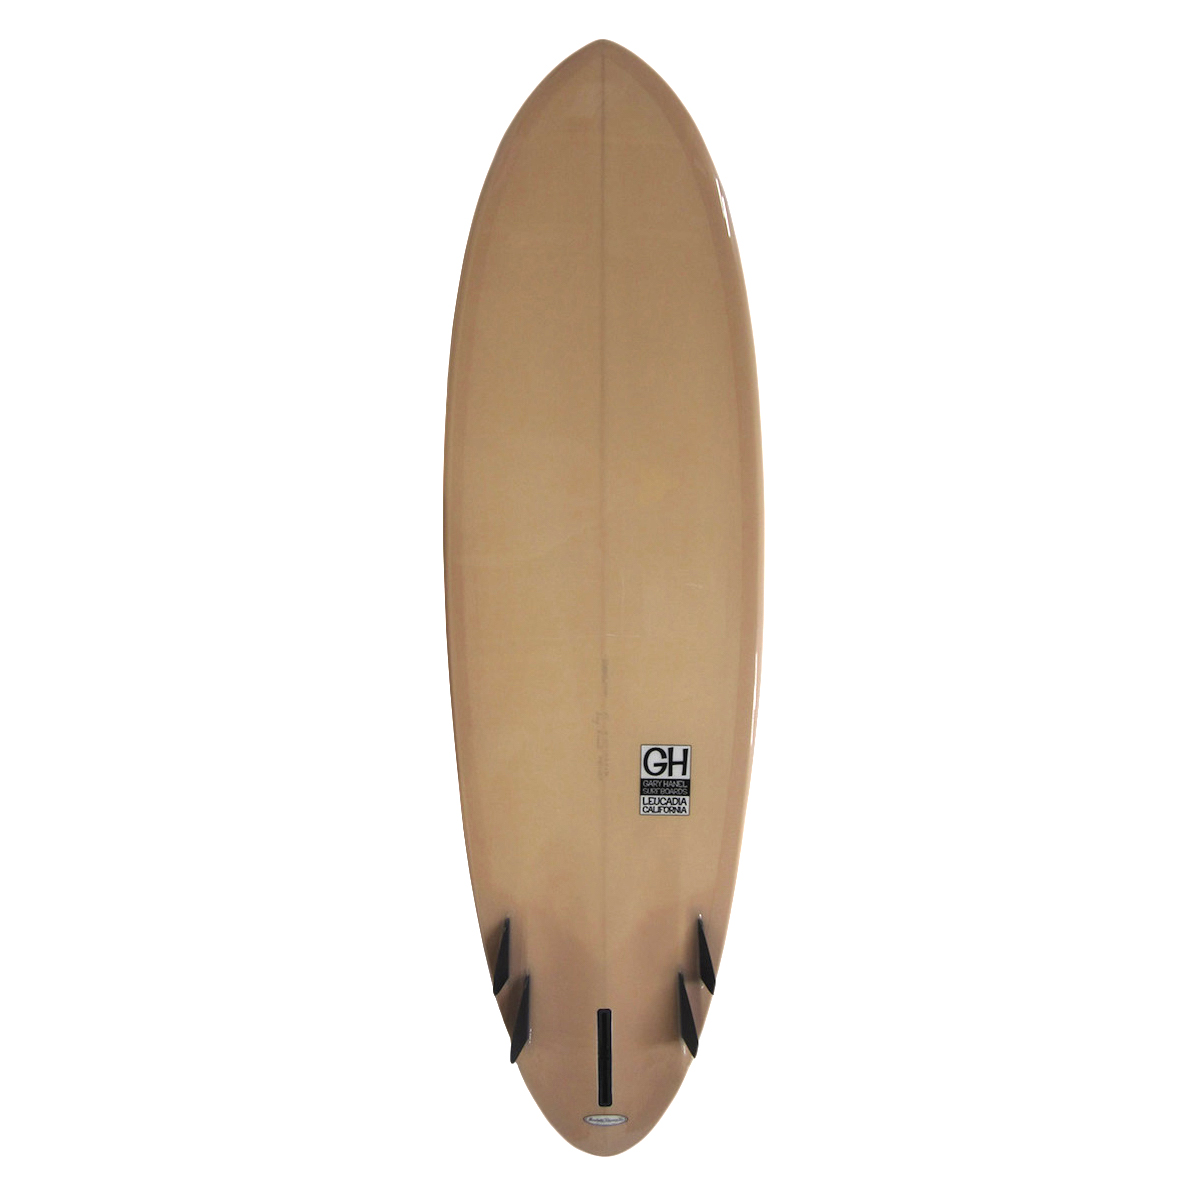 Gary Hanel Surfboards / Tear Drop Bonzer 6`9